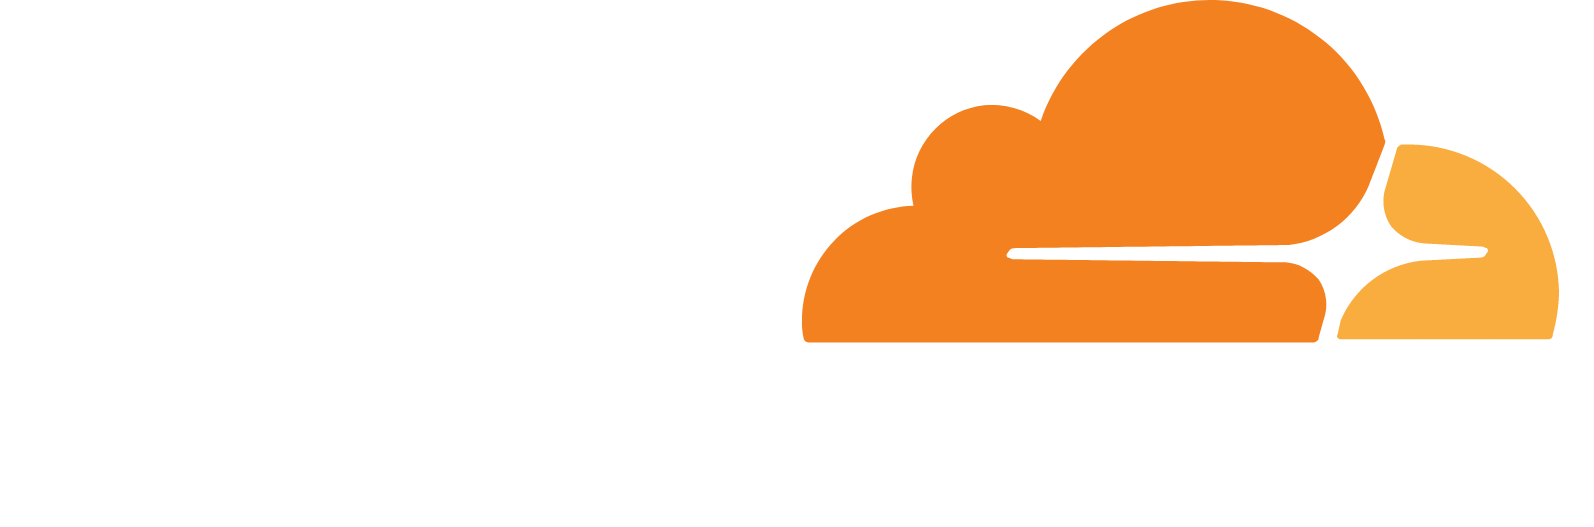 Cloudflare Logo groß für dunkle Hintergründe (transparentes PNG)